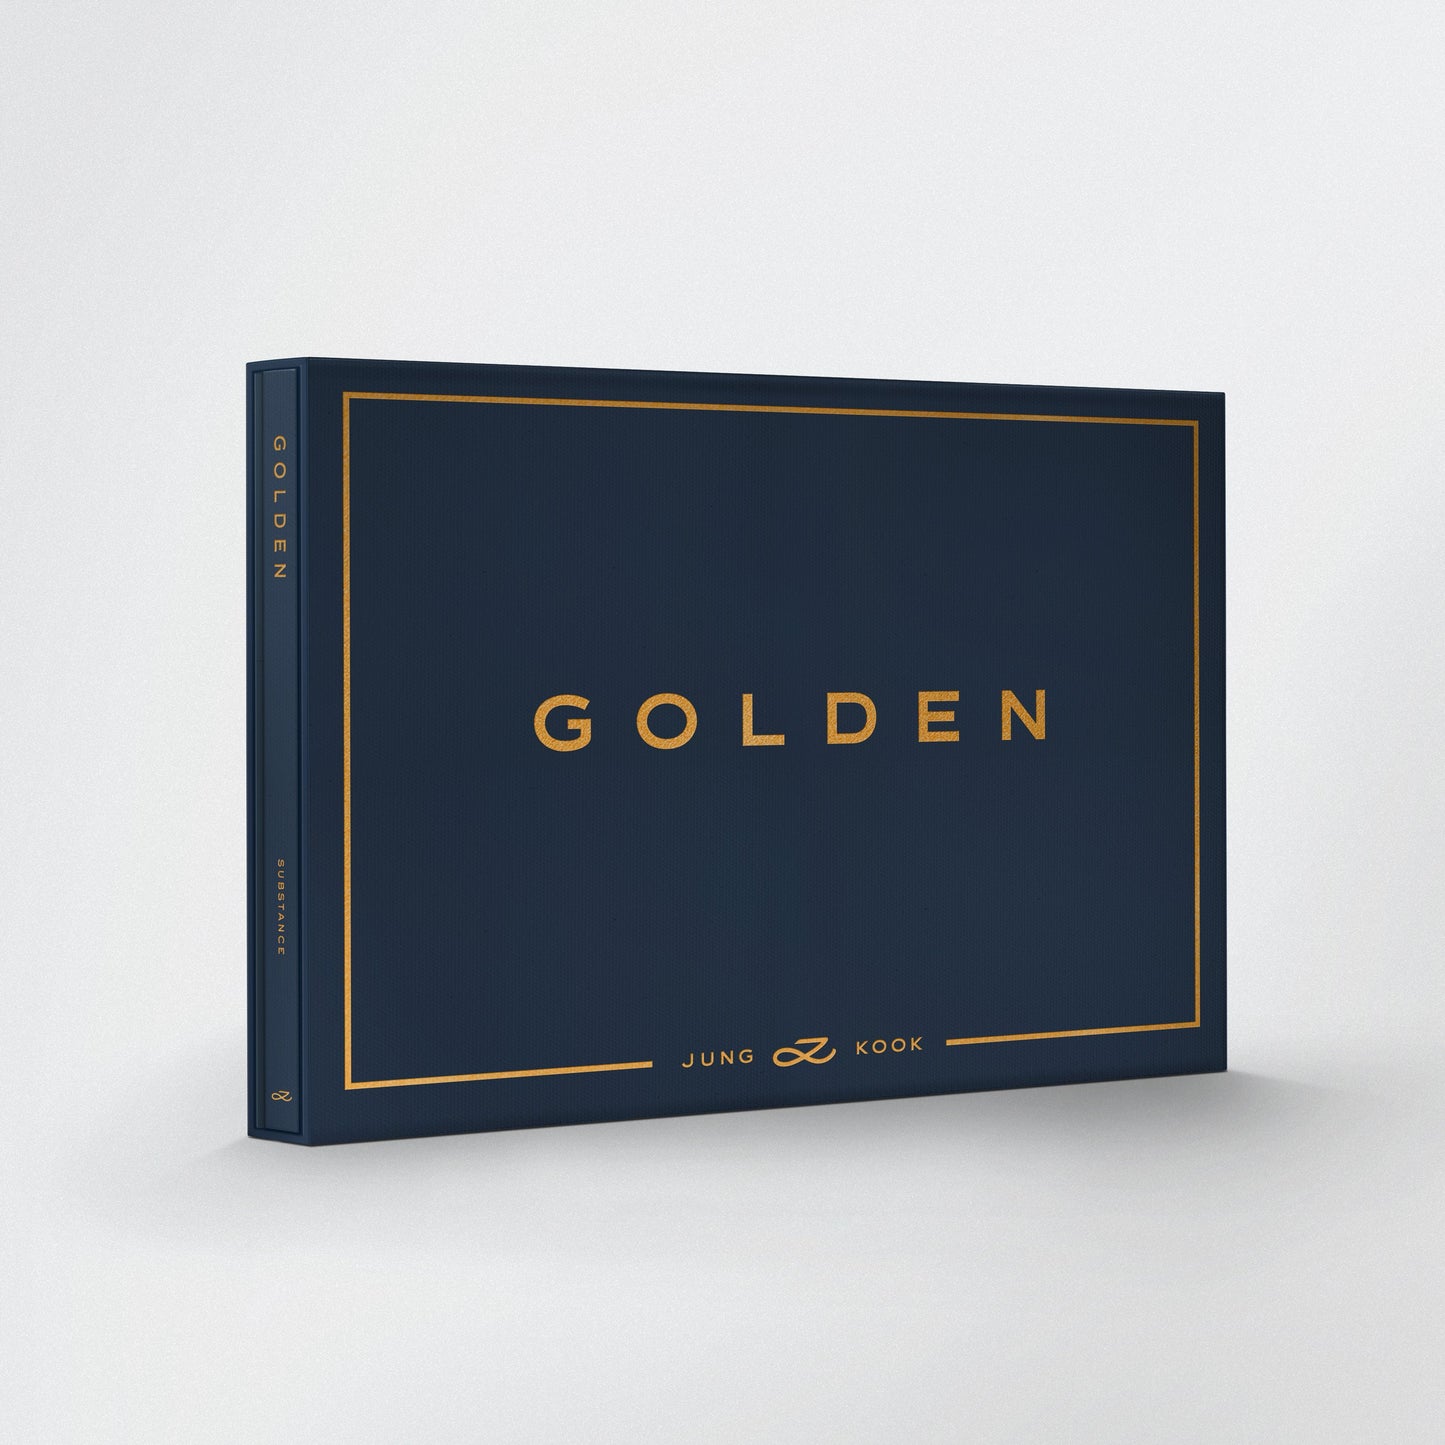 JUNGKOOK SOLO ALBUM 'GOLDEN' SUBSTANCE VERSION COVER